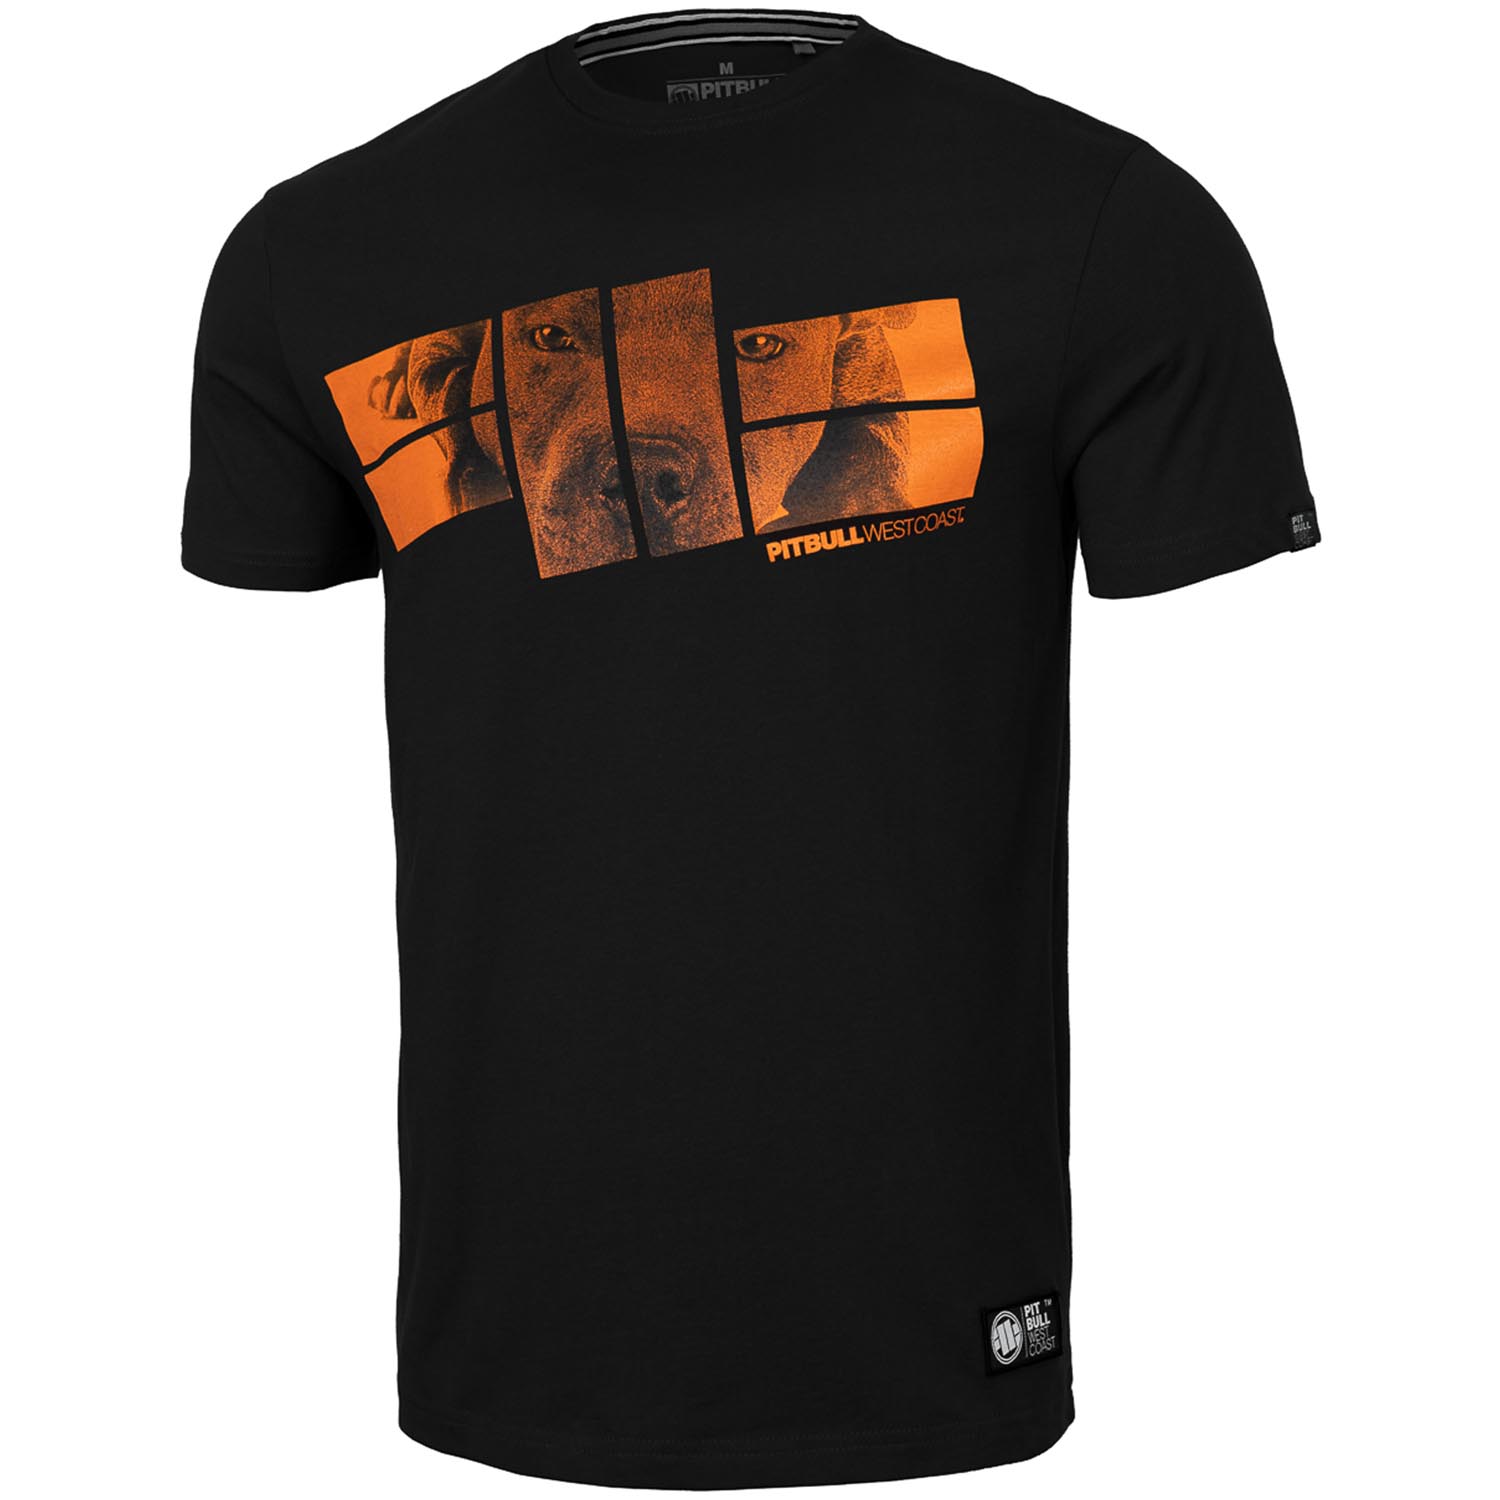 Pit Bull West Coast T-Shirt, Orange Logo, schwarz